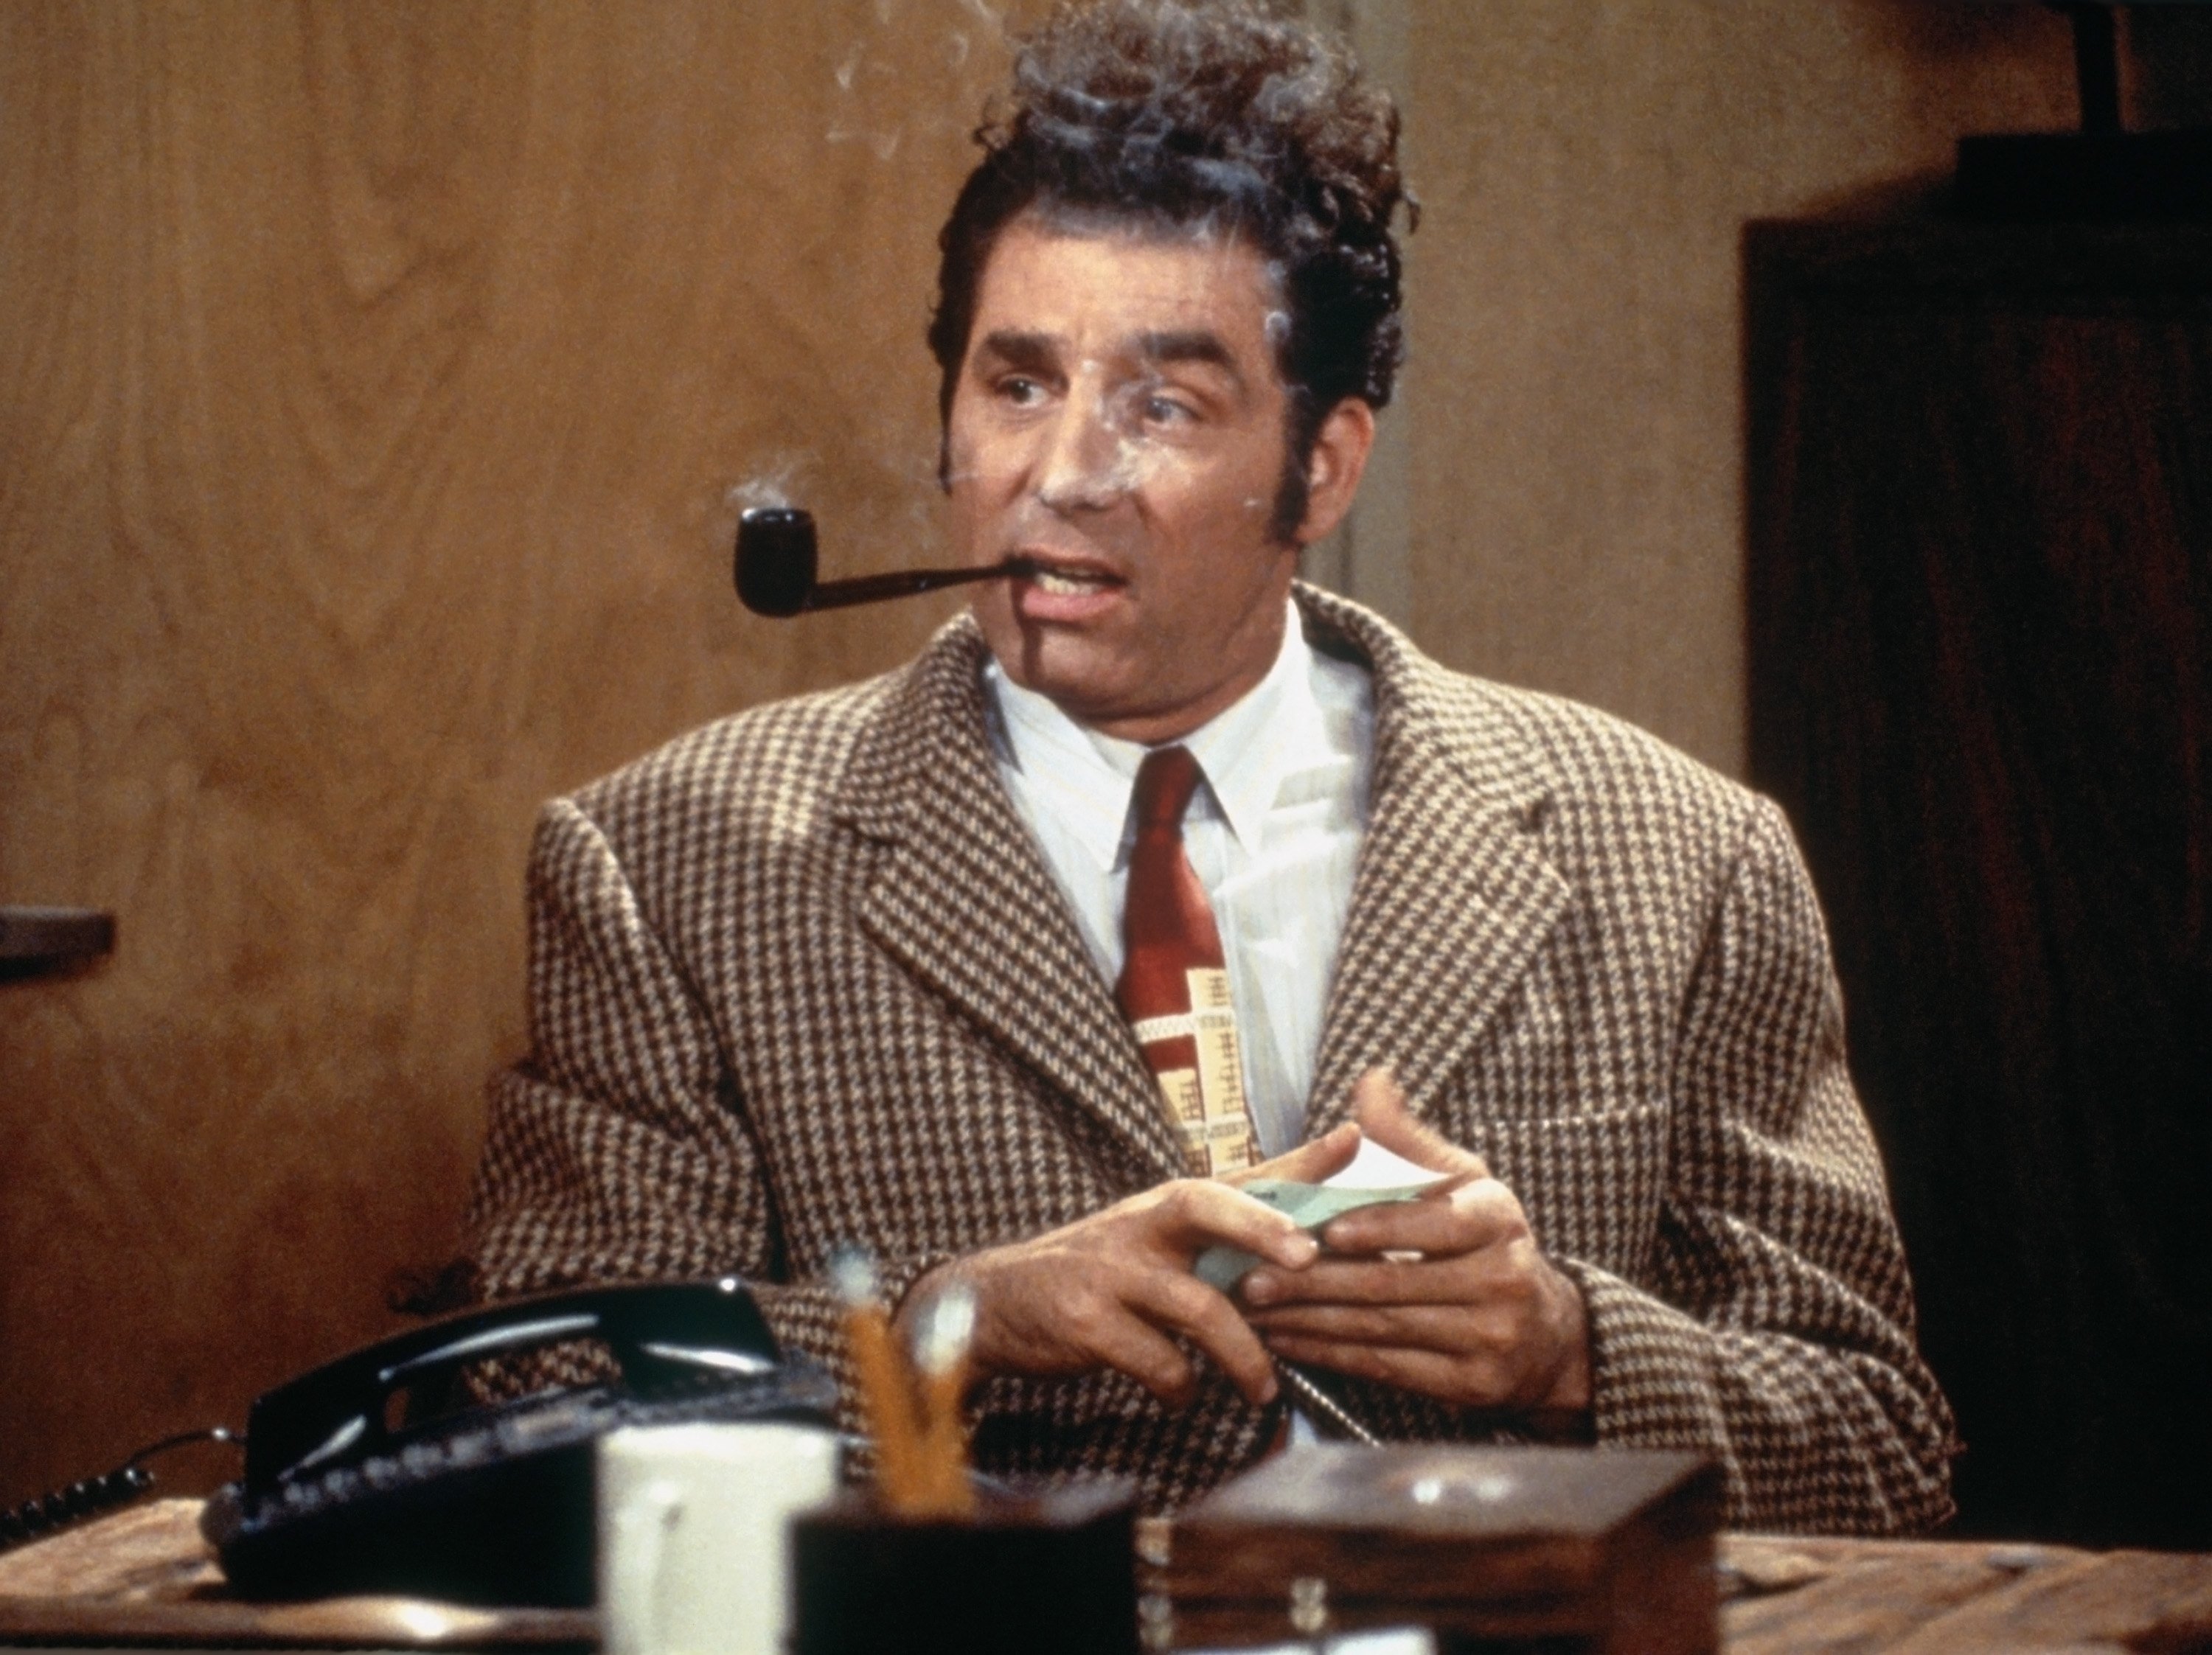 Michael Richards as Cosmo Kramer 'Seinfeld' wearing tweed blazer and smoking tobacco pipe.